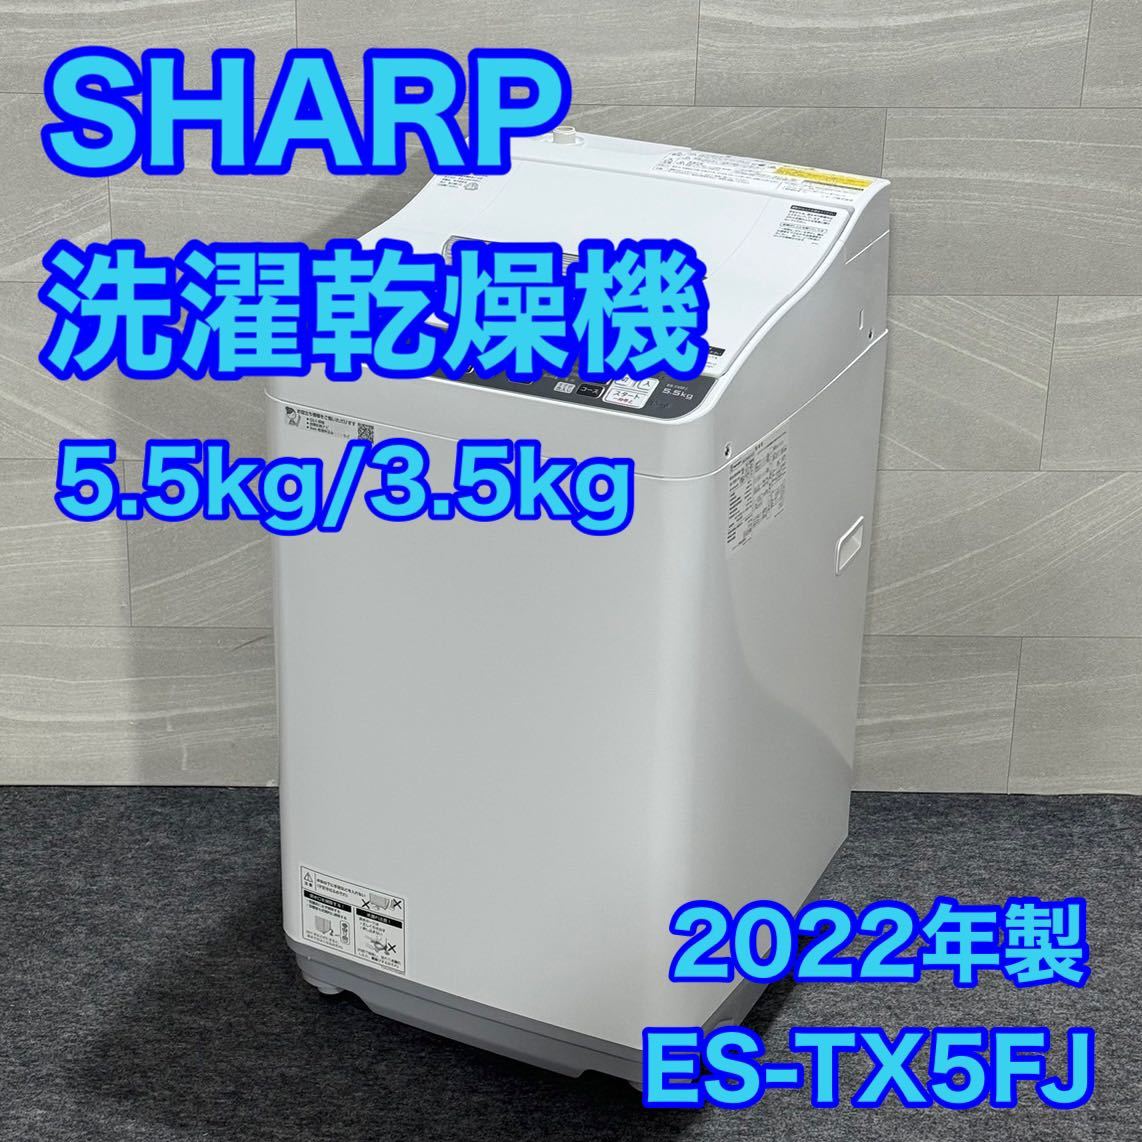 SHARP 乾燥機能付き洗濯機 5.5kg 2022年 高年式 美品 d1822 シャープ ES-TX5FJ 洗濯機 乾燥機 穴無し洗濯槽 洗濯乾燥機